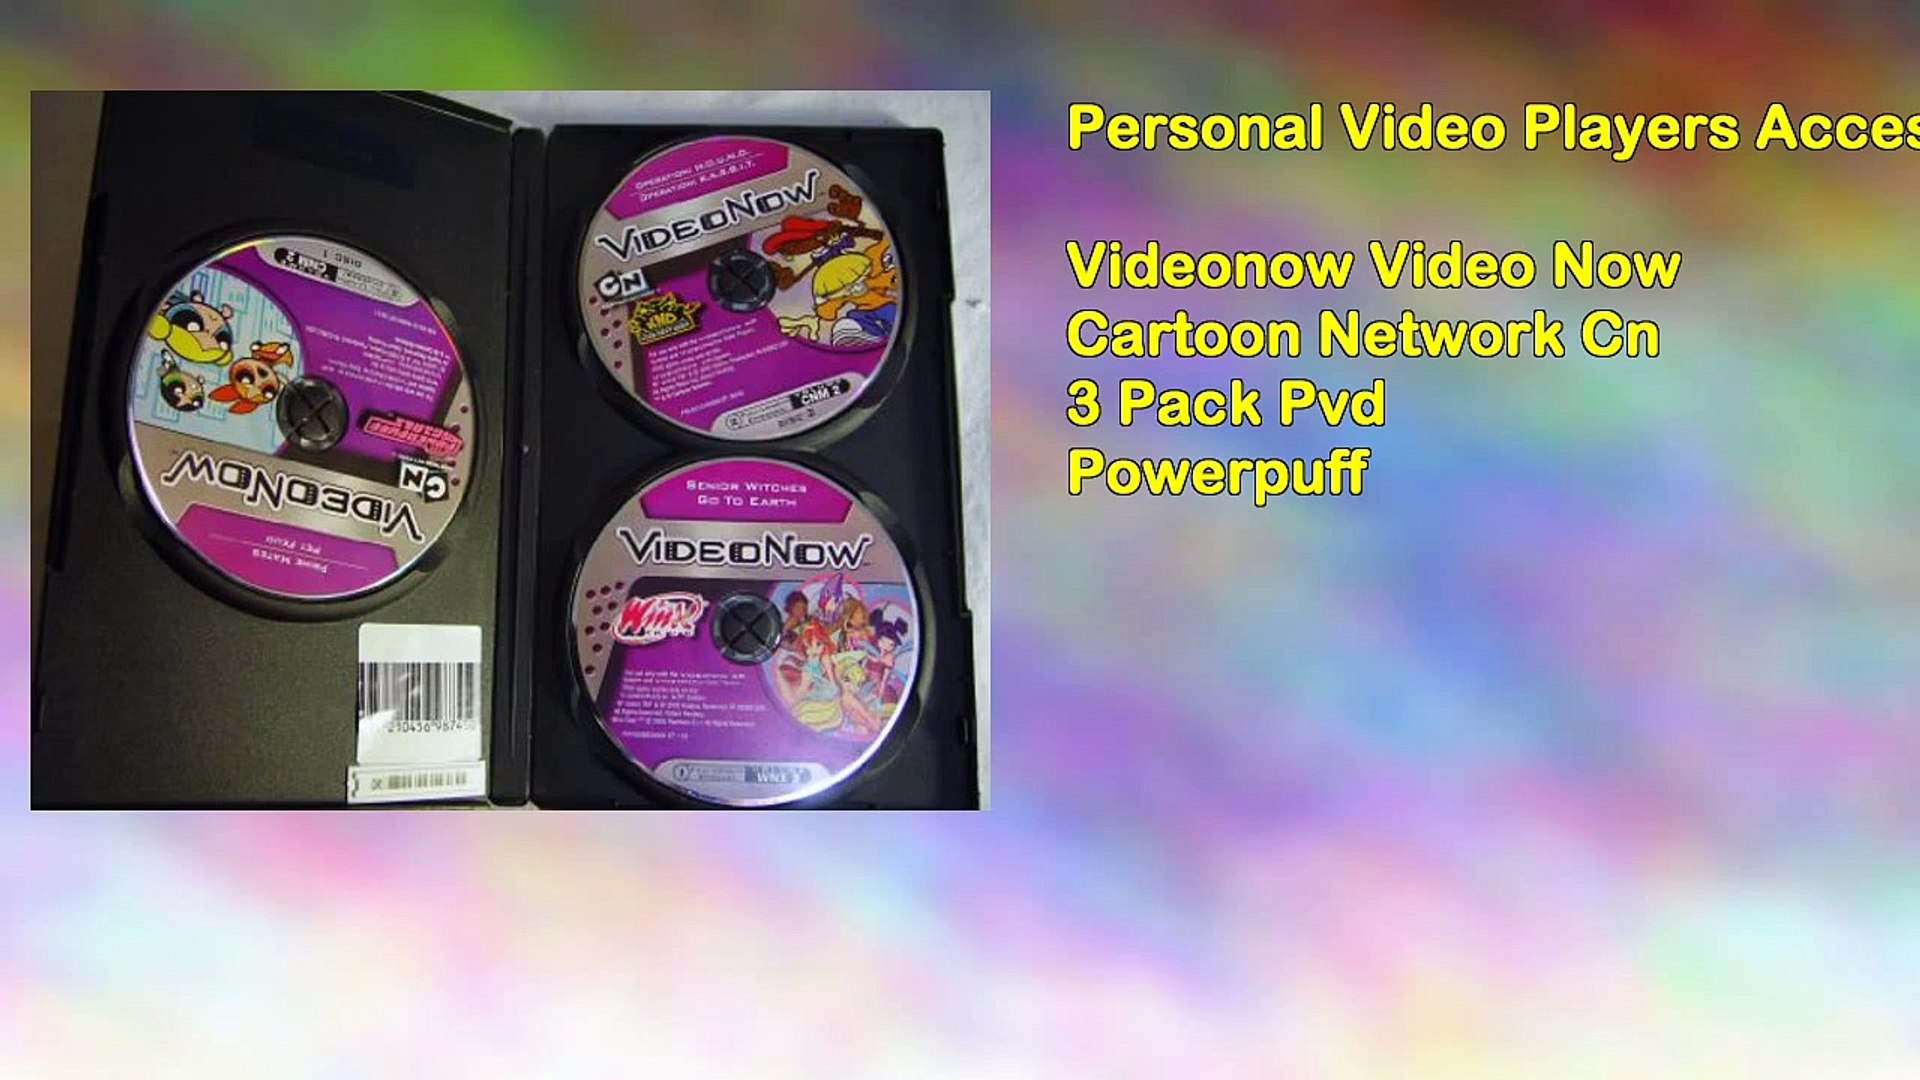 Videonow Video Now Cartoon Network Cn 3 Pack Pvd Powerpuff - video  Dailymotion